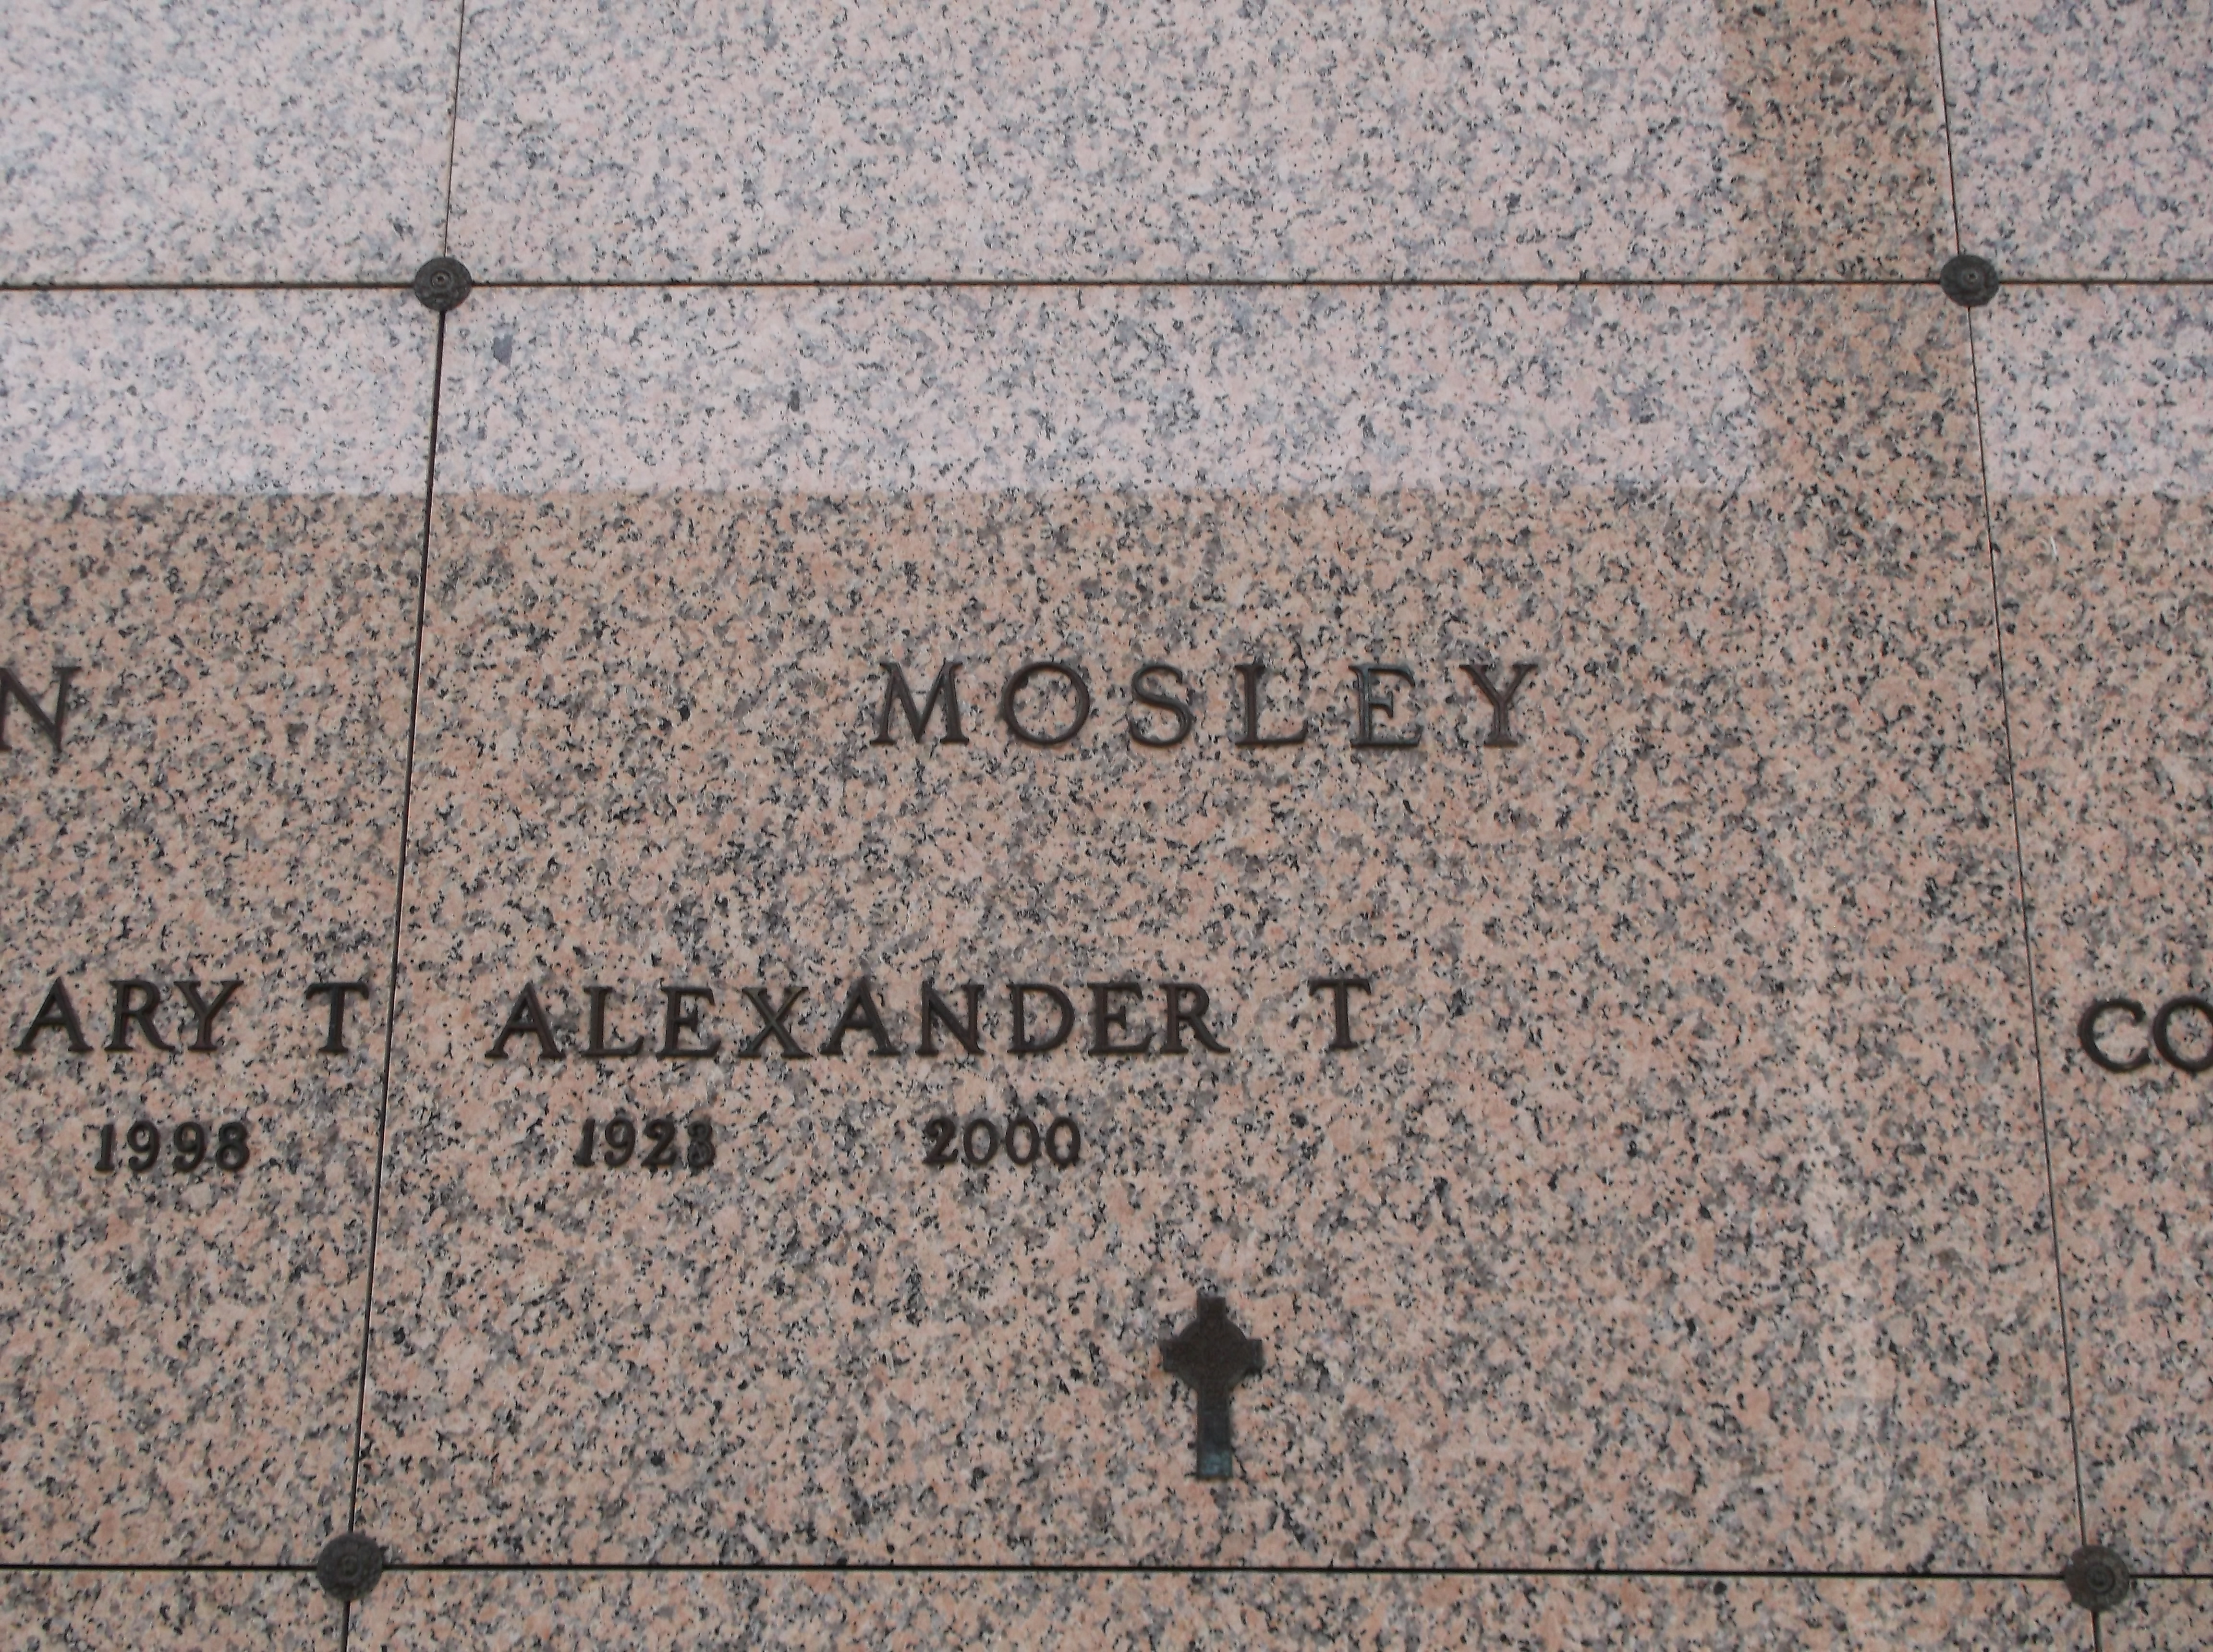 Alexander T Mosley